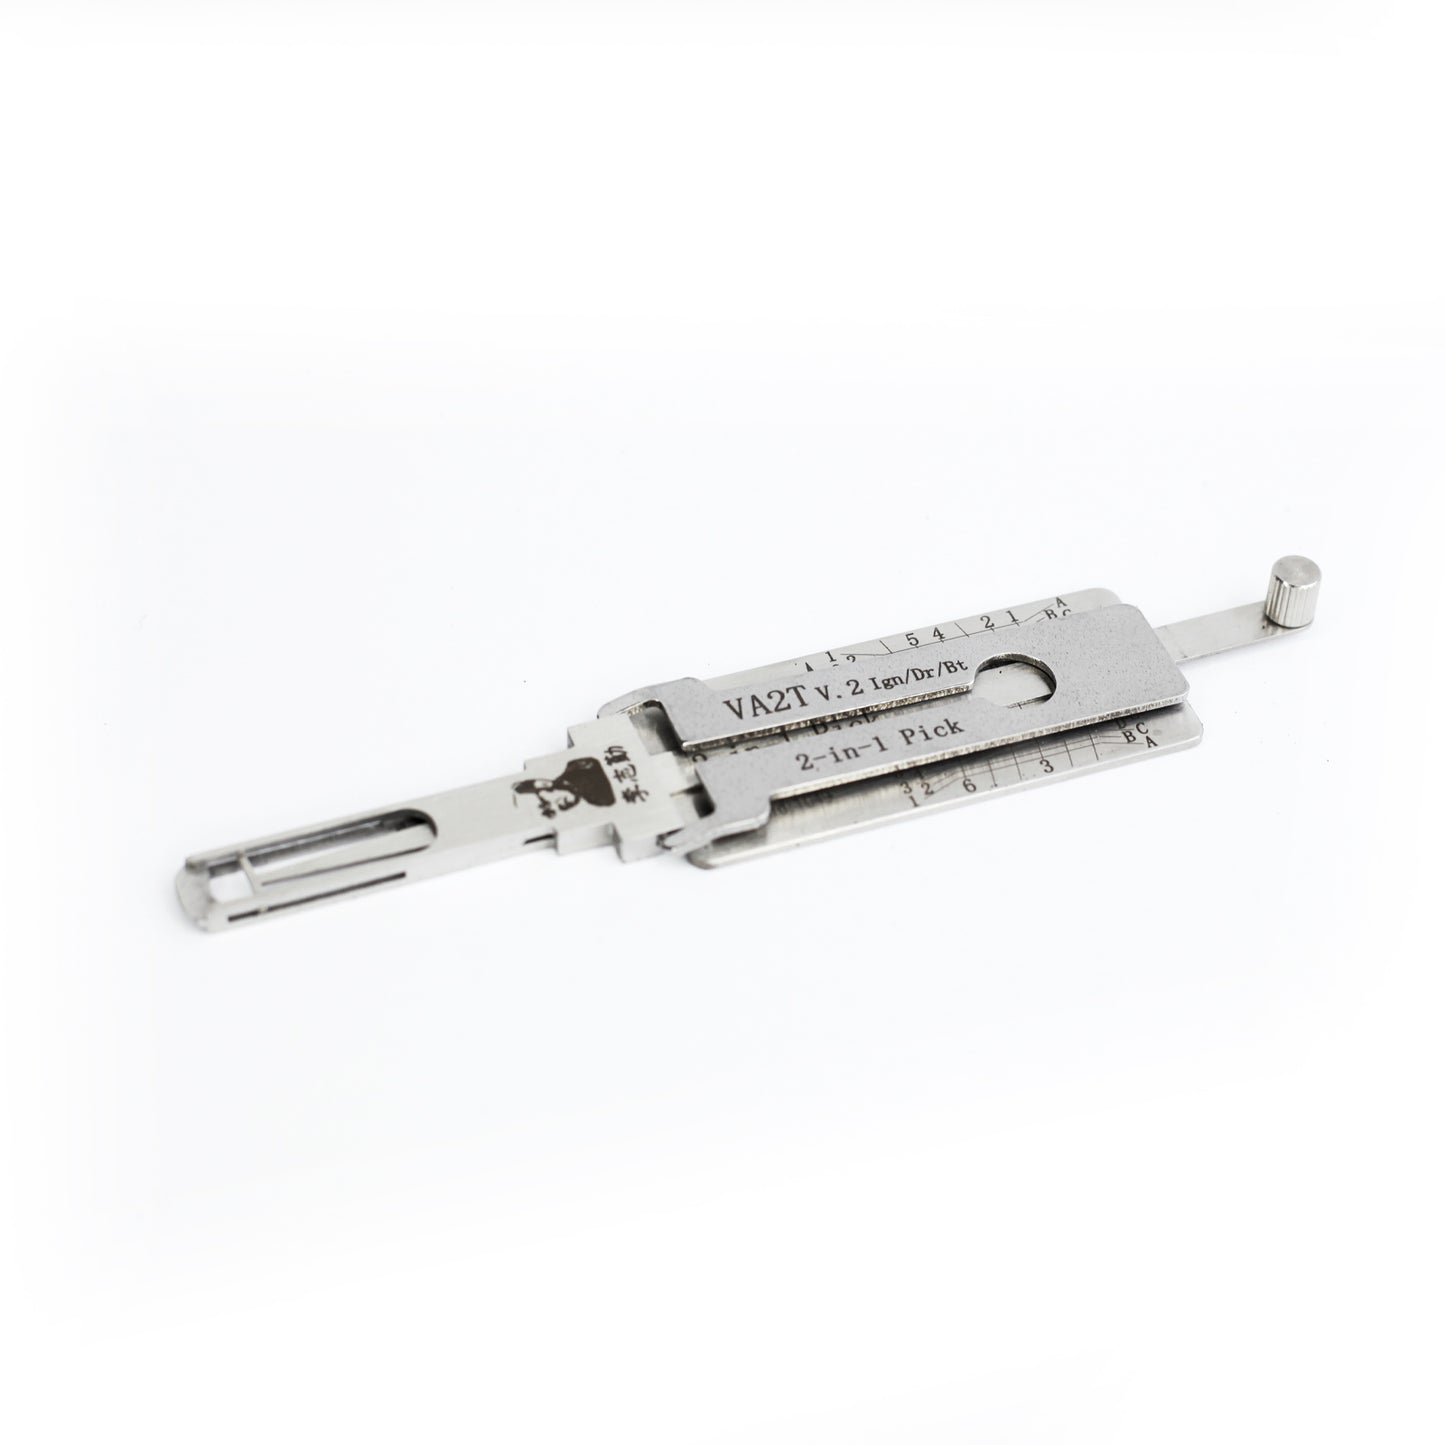 Original Auto Locksmith Tools door lishi 2-in-1Unlock ToolHigh Quality VA2T V.2 Ign/Dr/Bt